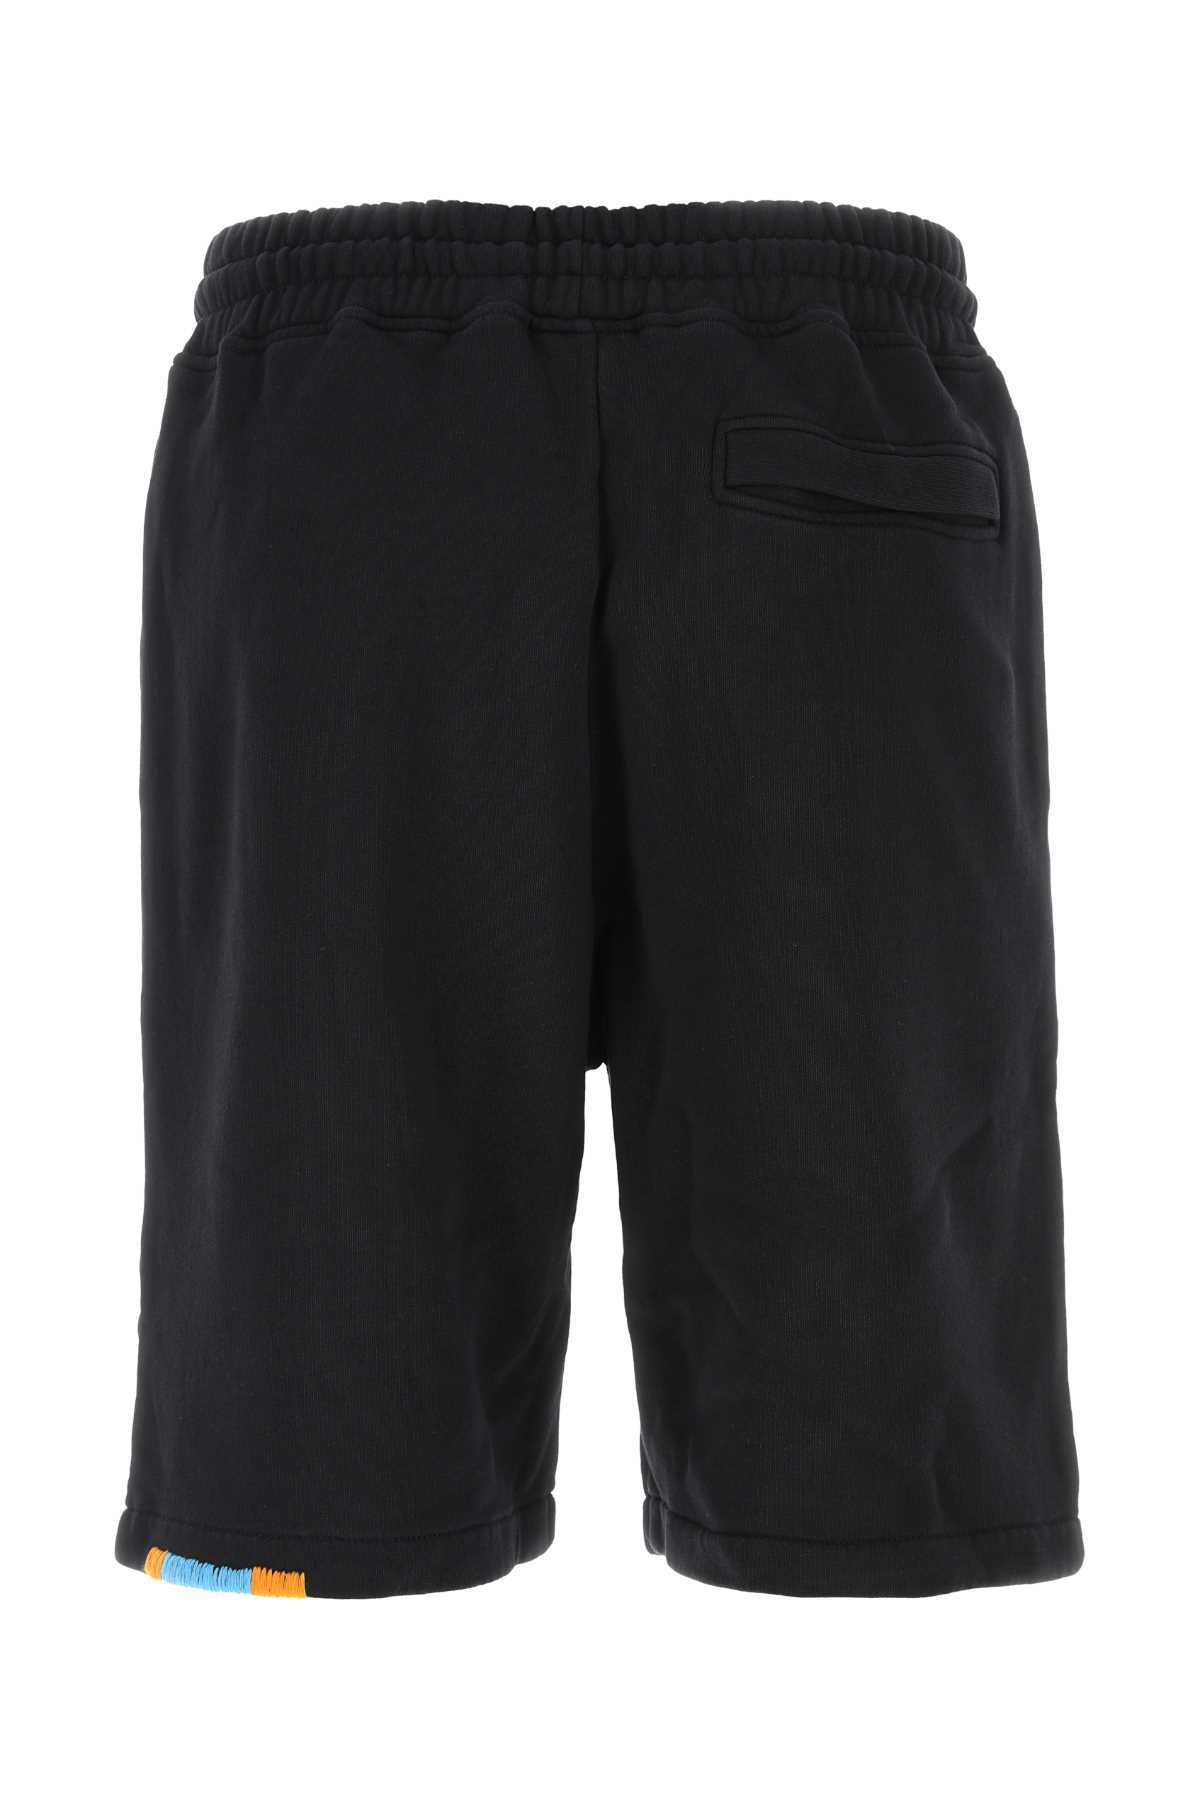 Marcelo Burlon County Of Milan Black Cotton Bermuda Shorts In Blackorange